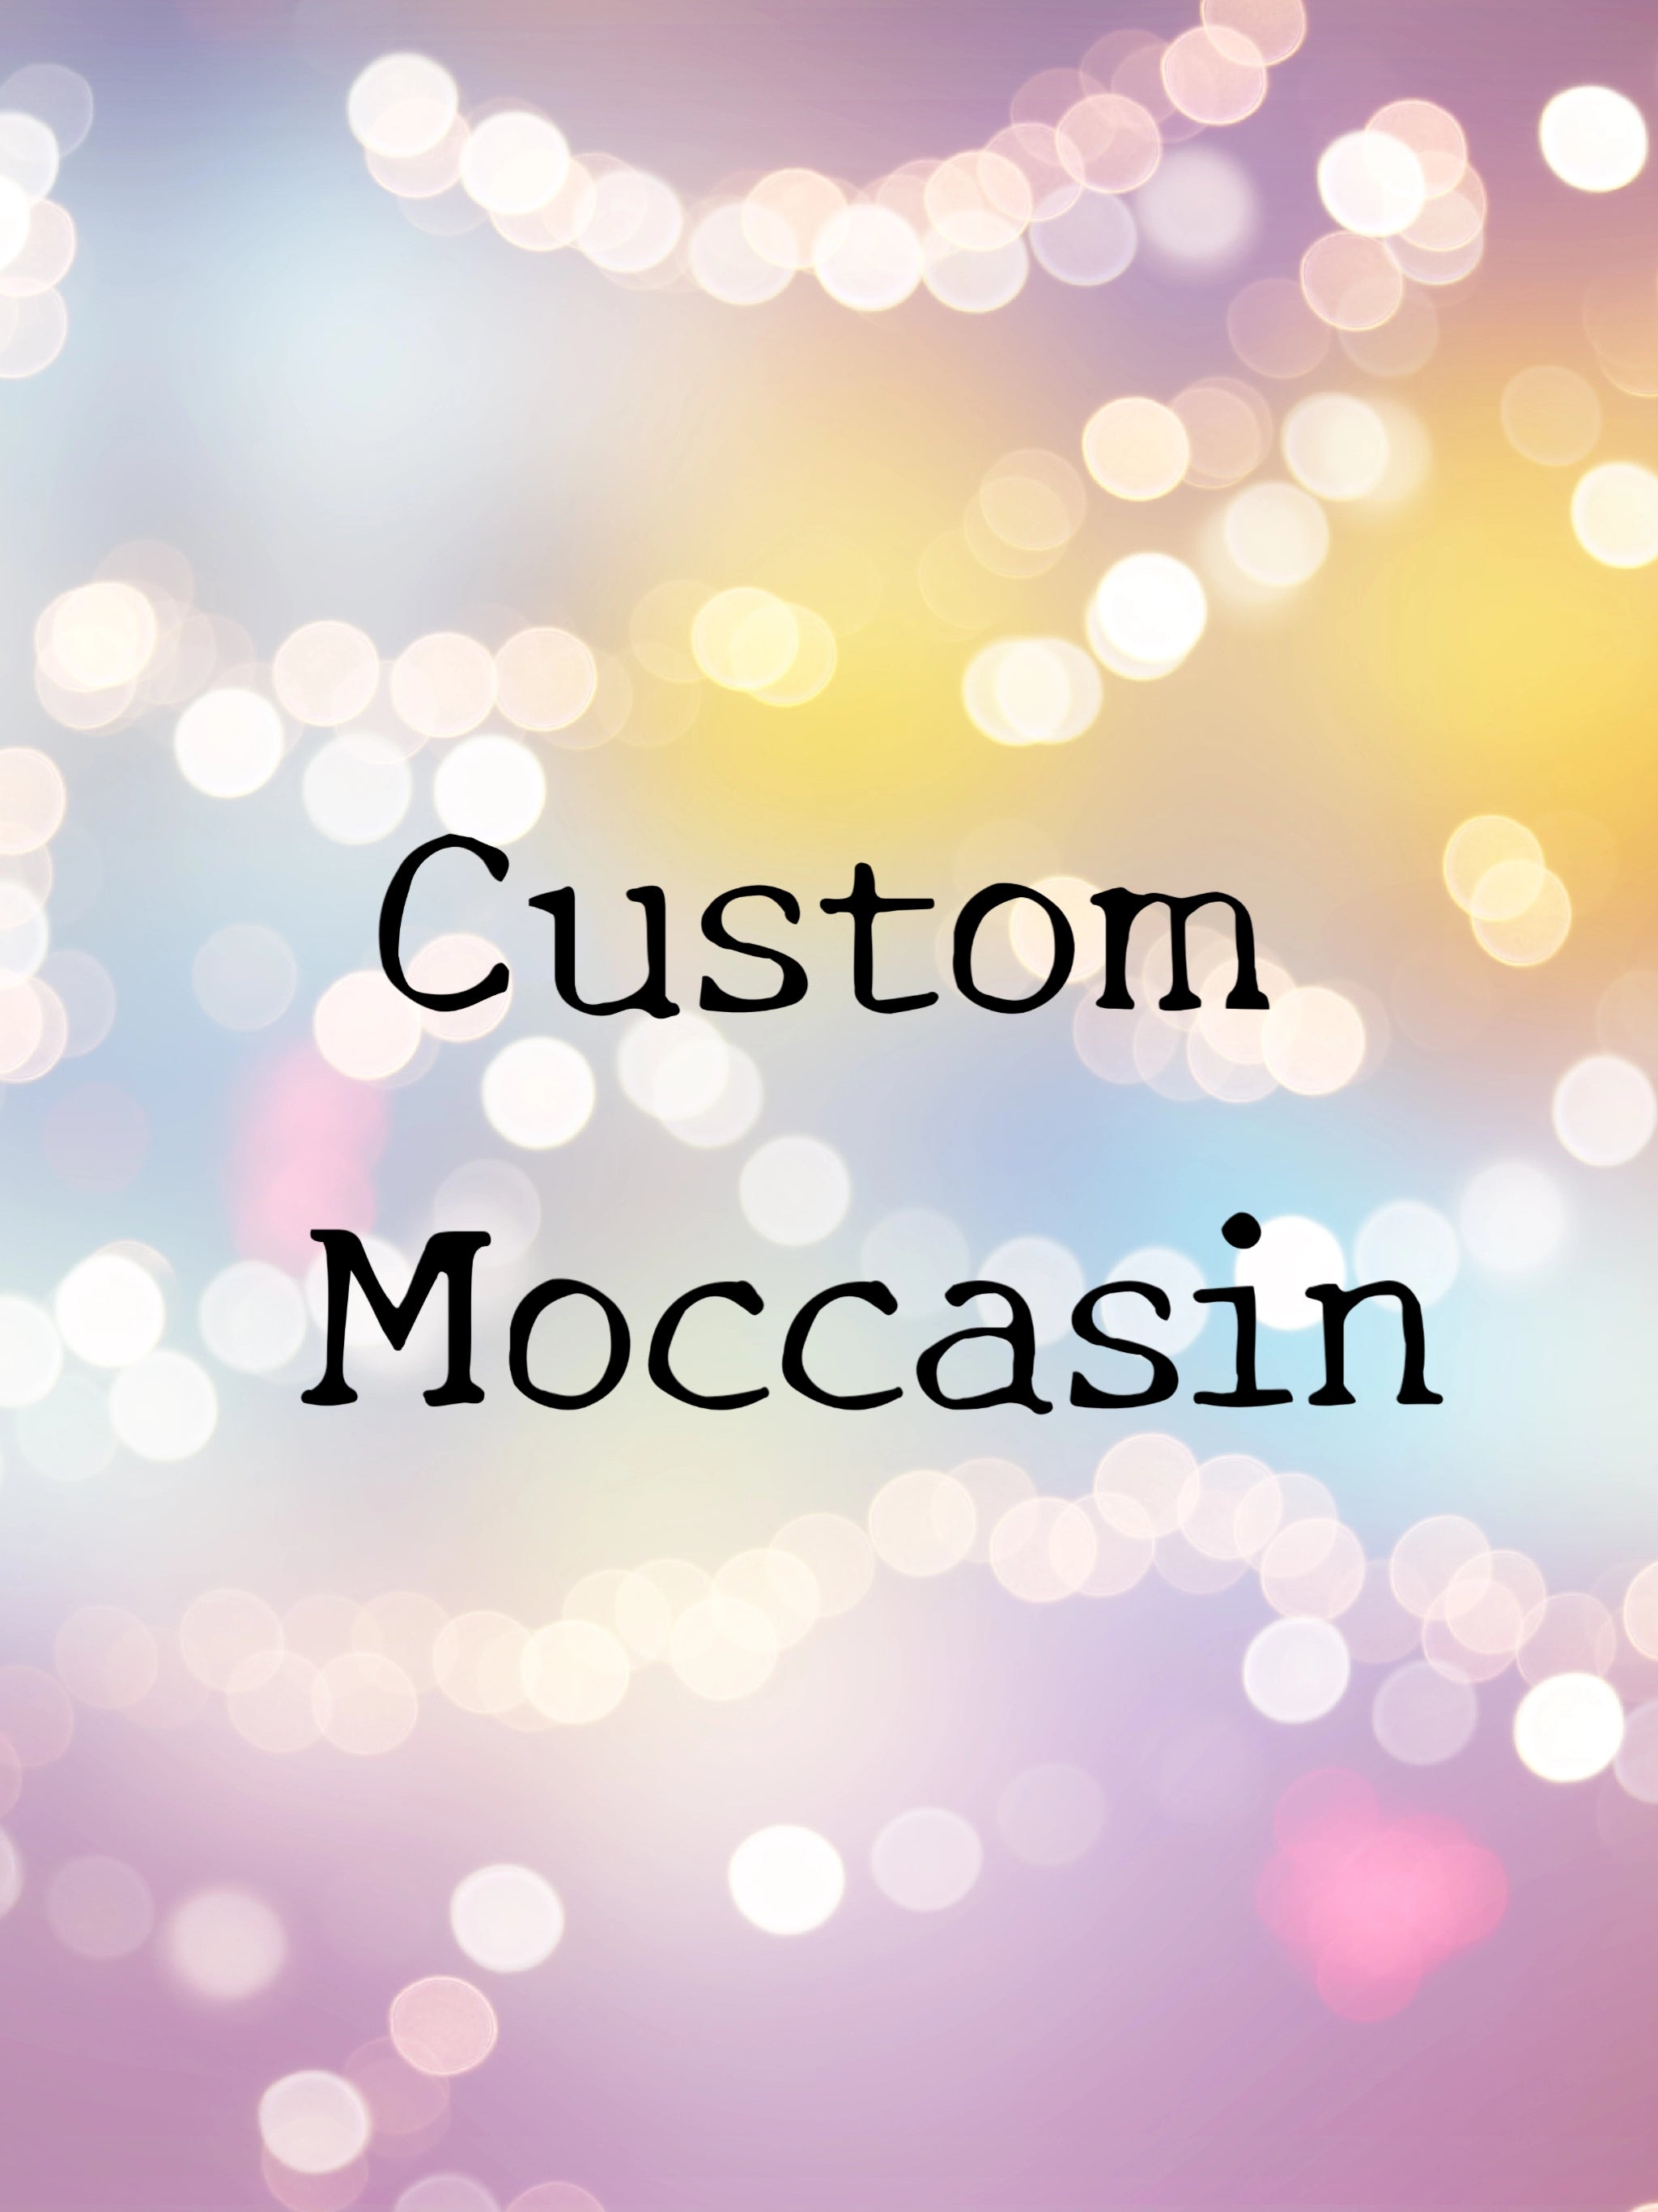 Custom Moccasin